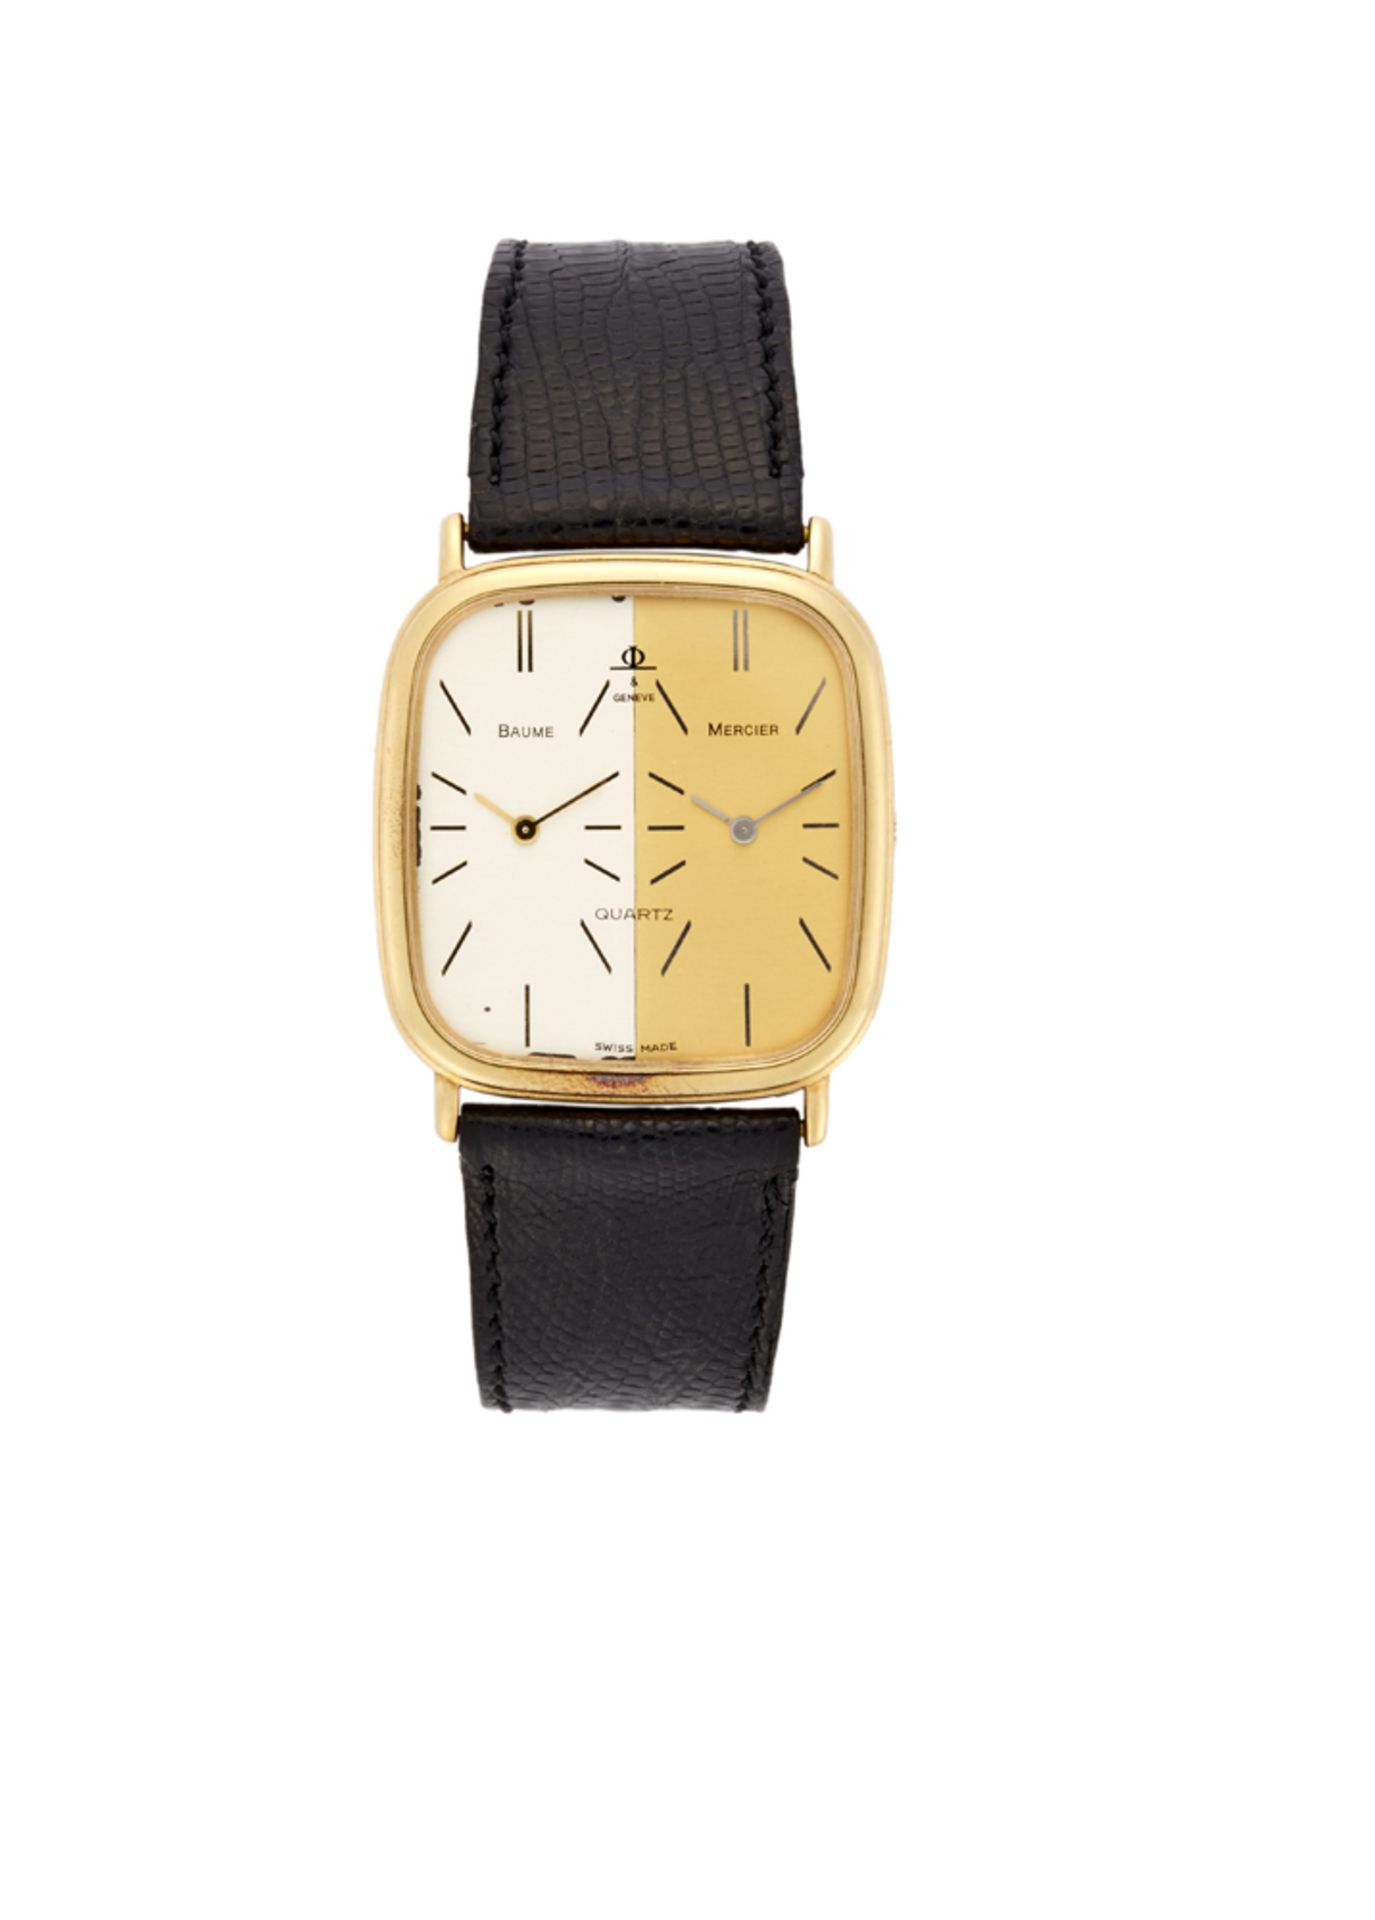 BAUME & MERCIERGent's 18K gold wristwatch1970sDial signedQuartz movementDual time dial with